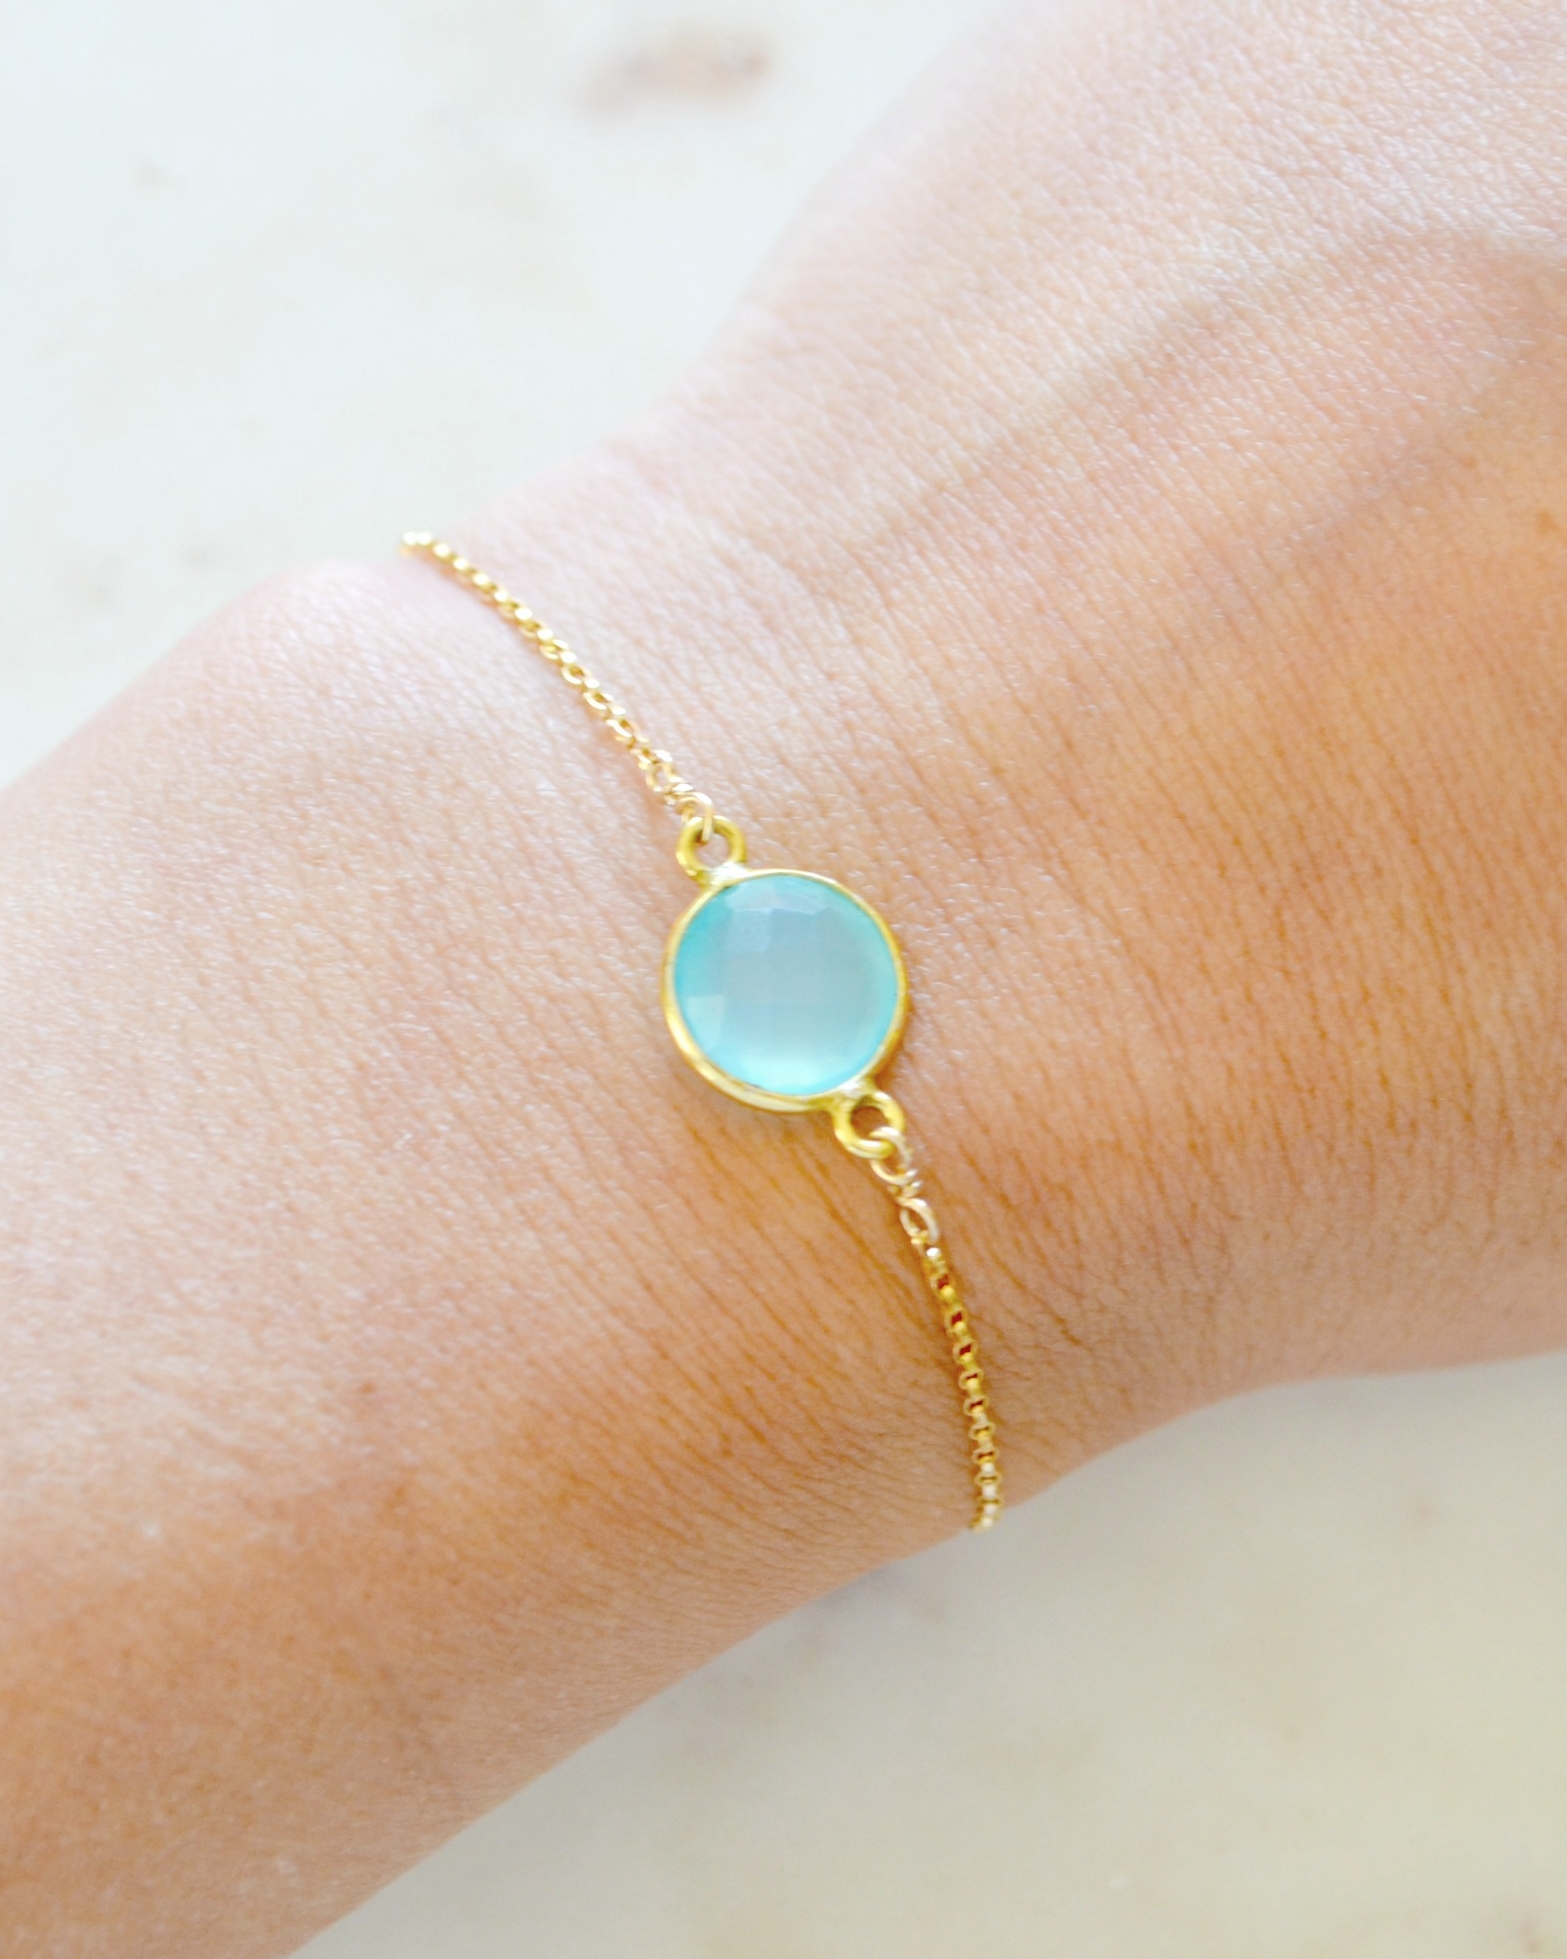 Dainty Gold and aqua gemstone bracelet